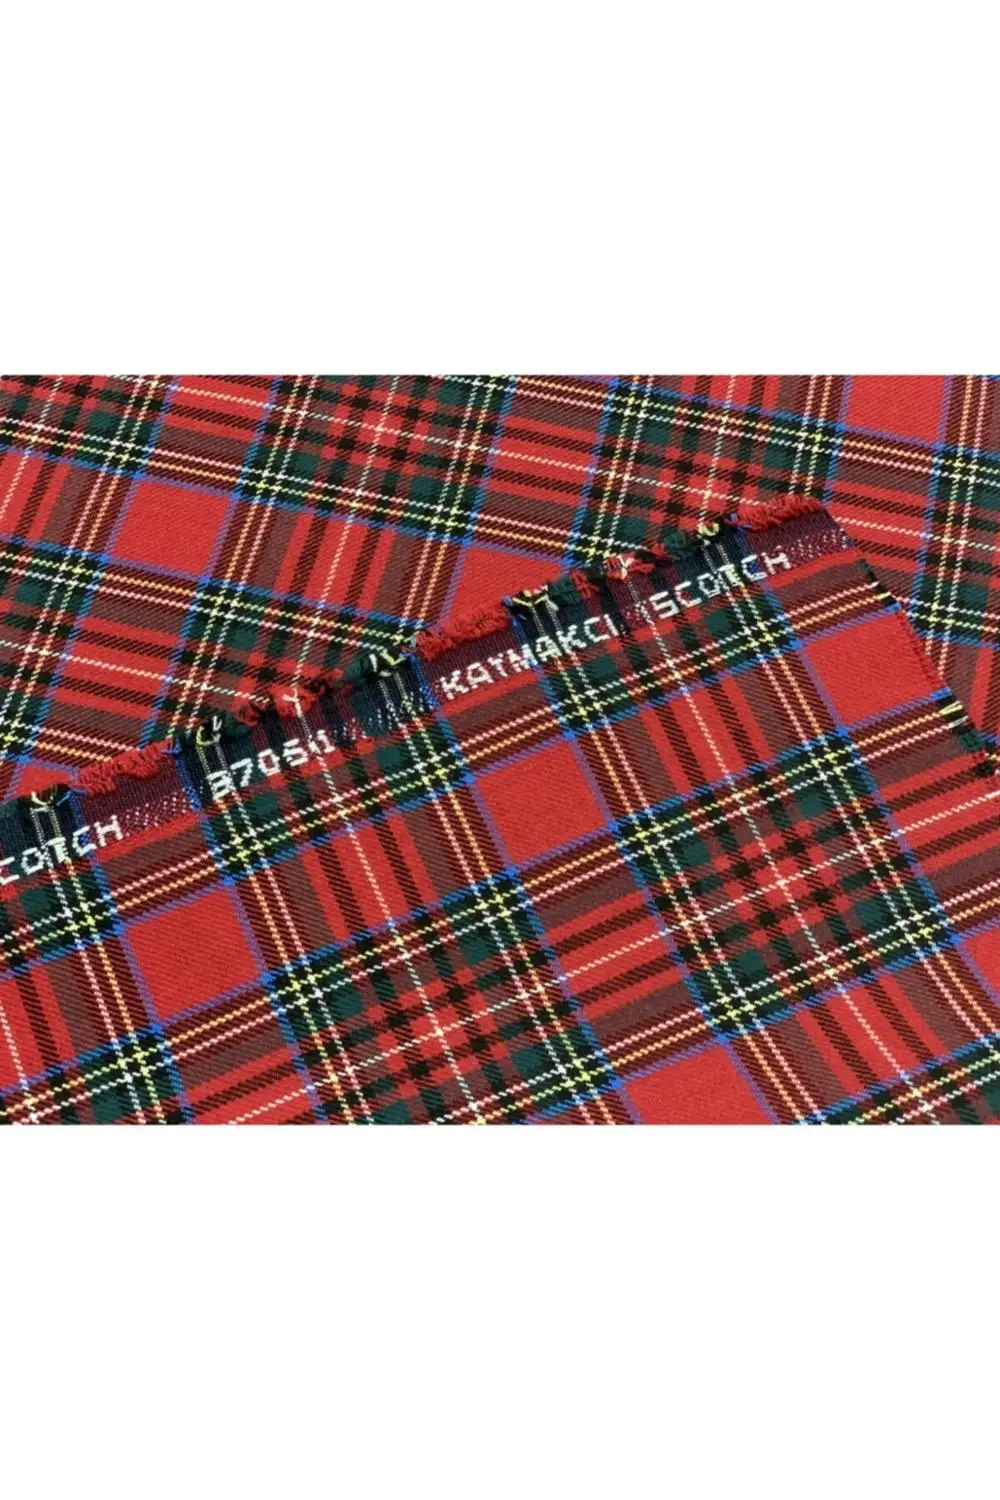 

FS 3706-1 100cmx150cm Ecossaise Plaid Fabric High Christmas Tartan Scottish Polyester Viscose Cotton Twill Pleated Skirt Shirt